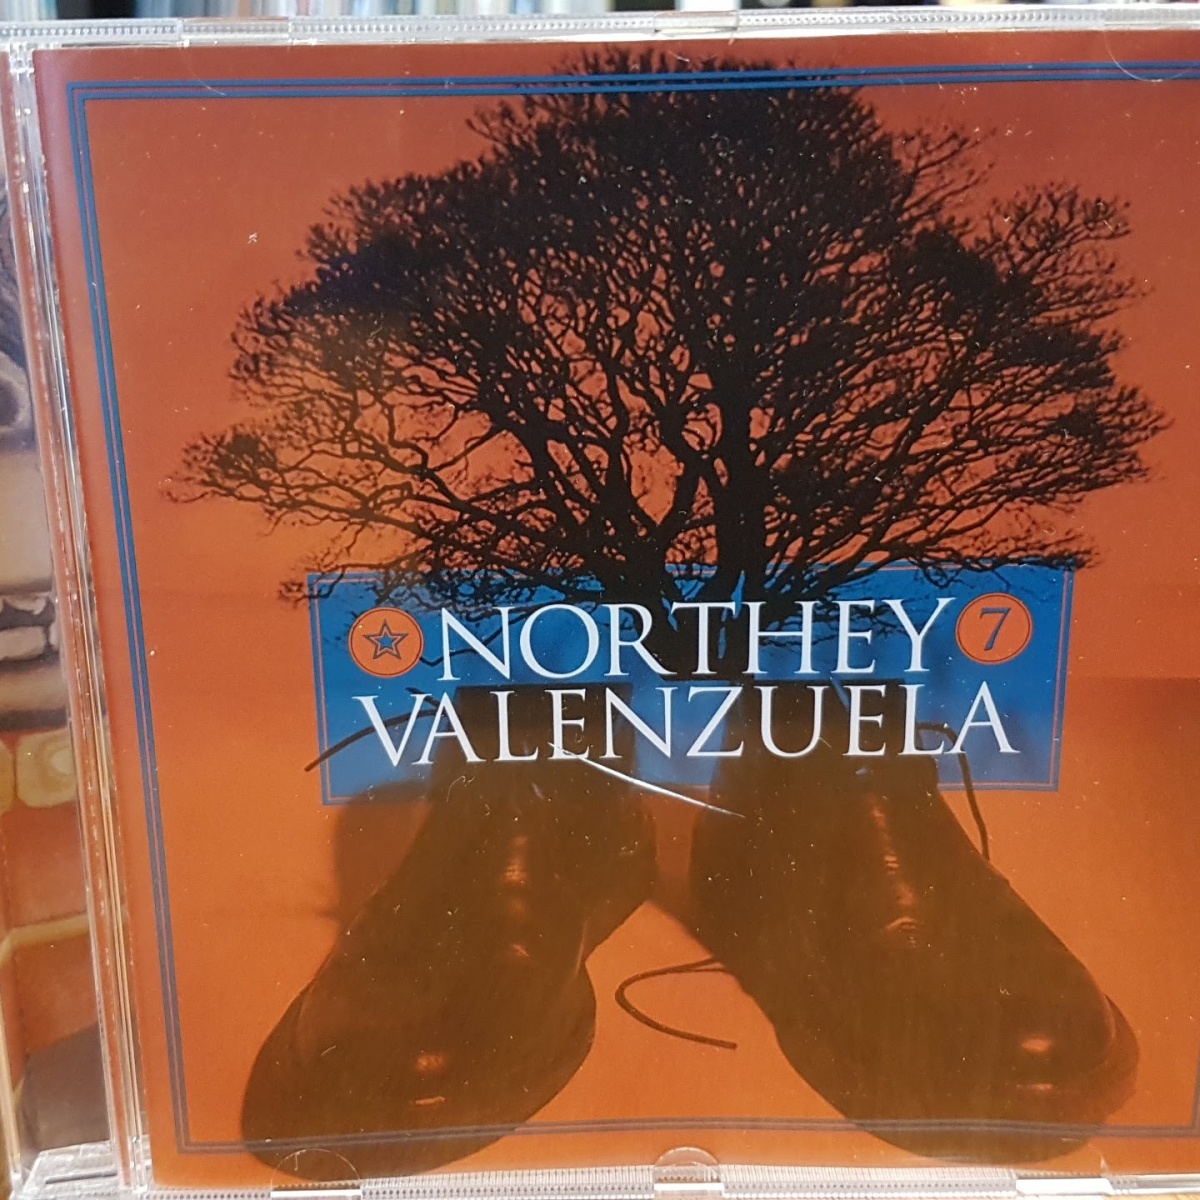 [Album Review] Northey Valenzuela